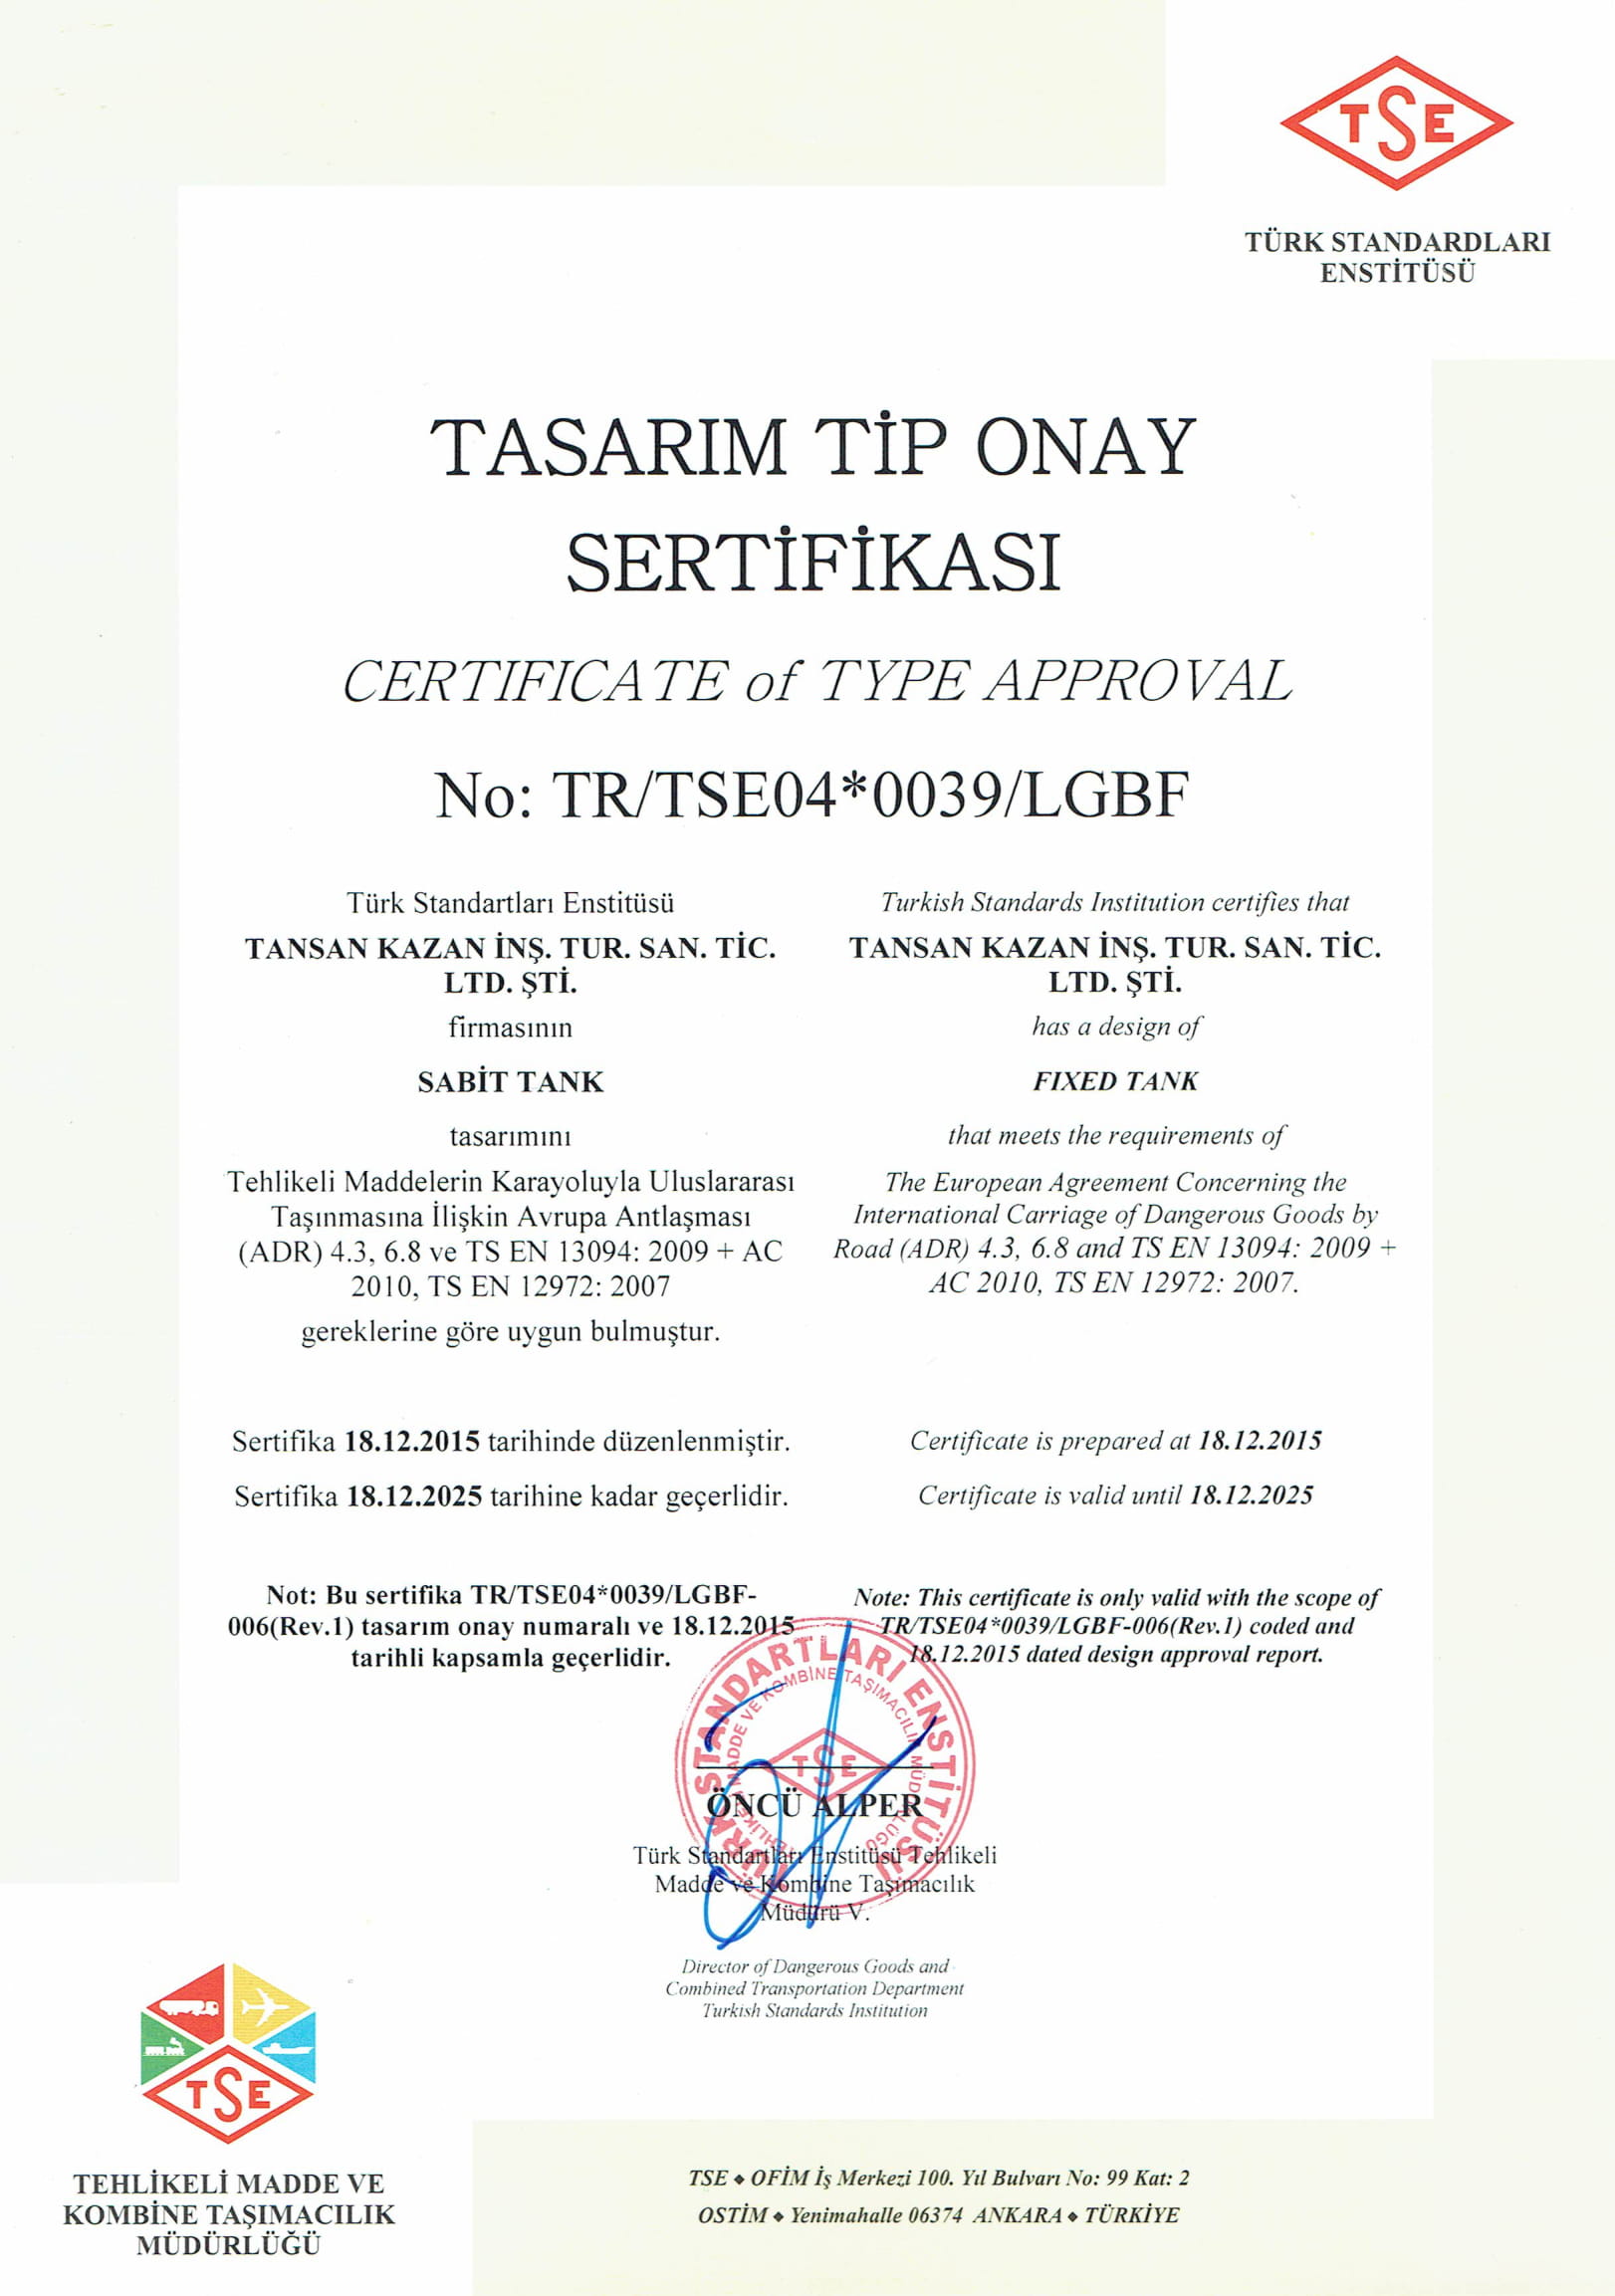 TSE-TASARIM-ONAY-SERTIFIKASI-Araç Üstü Alüminyum ADR Tasarım Tip Onay-1.jpg